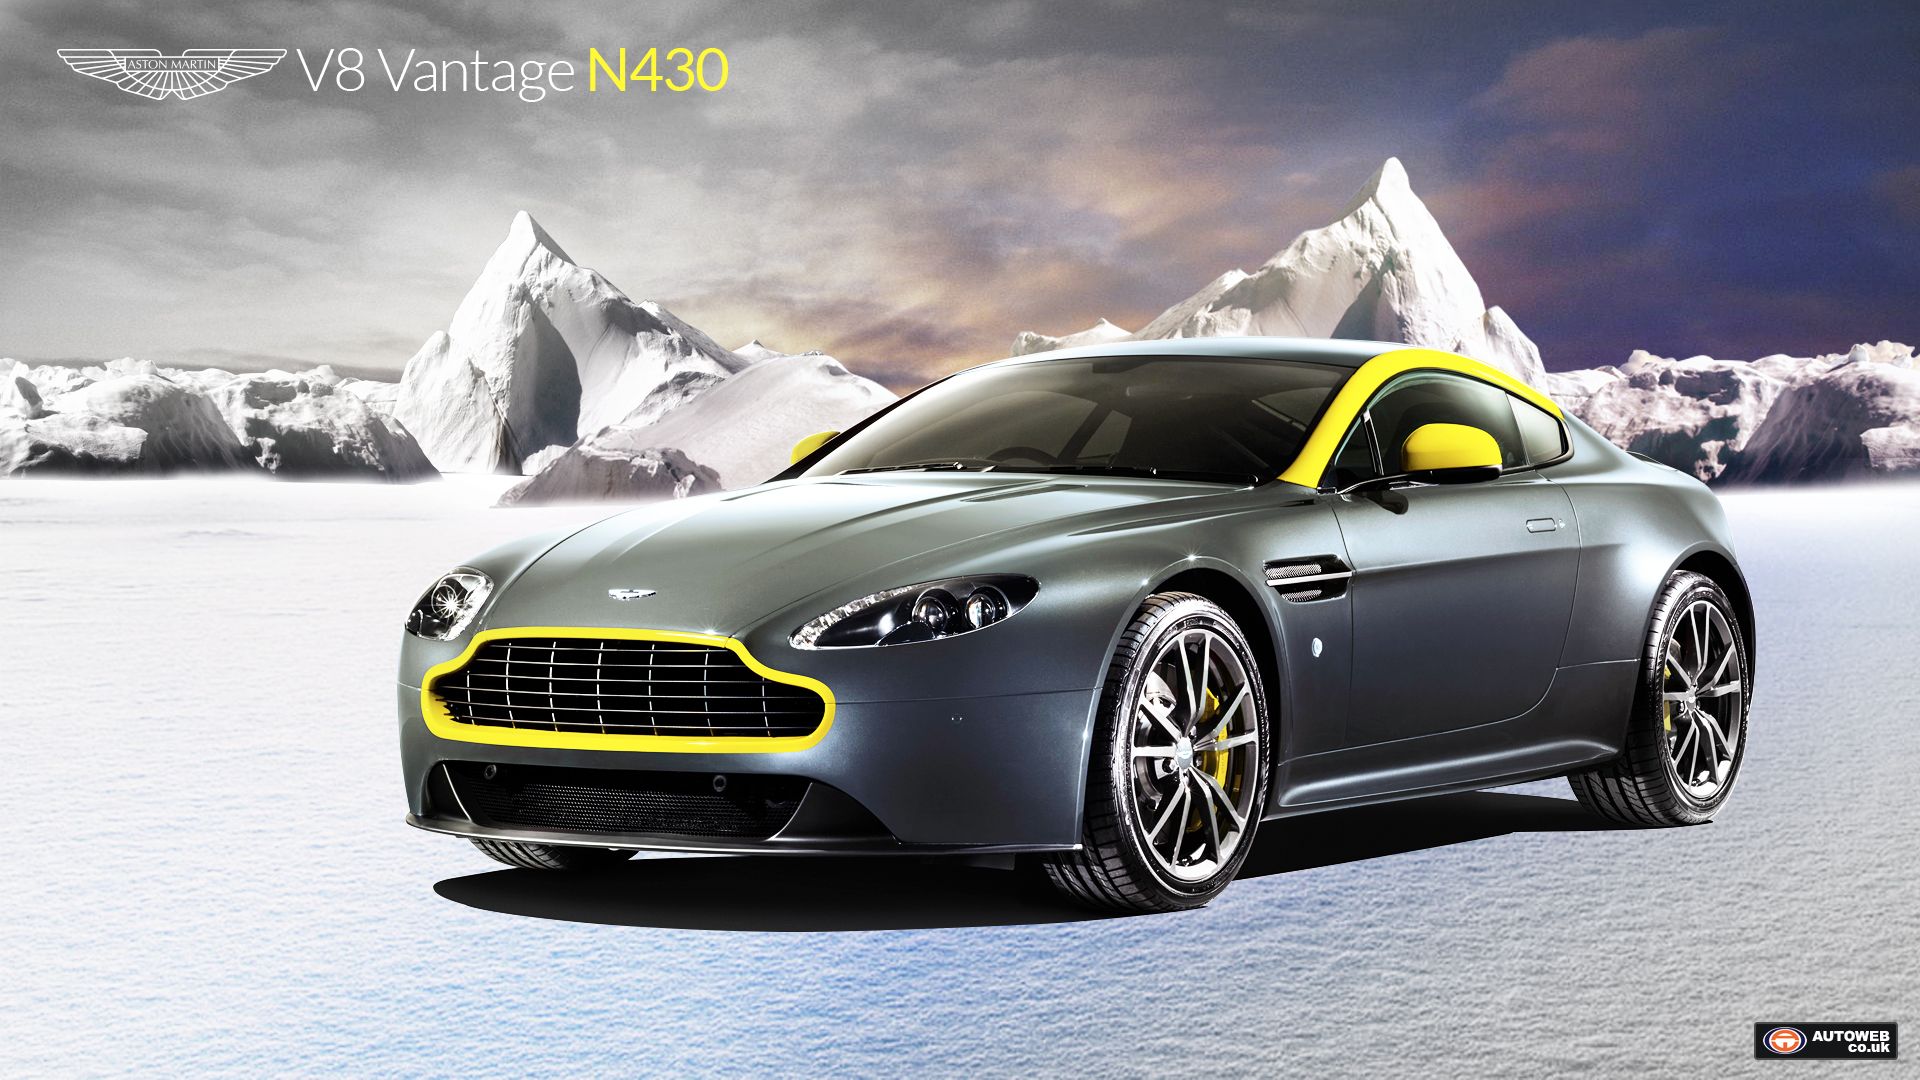 HD Quality Wallpaper | Collection: Vehicles, 1920x1080 2015 Aston Martin V8 Vantage N430